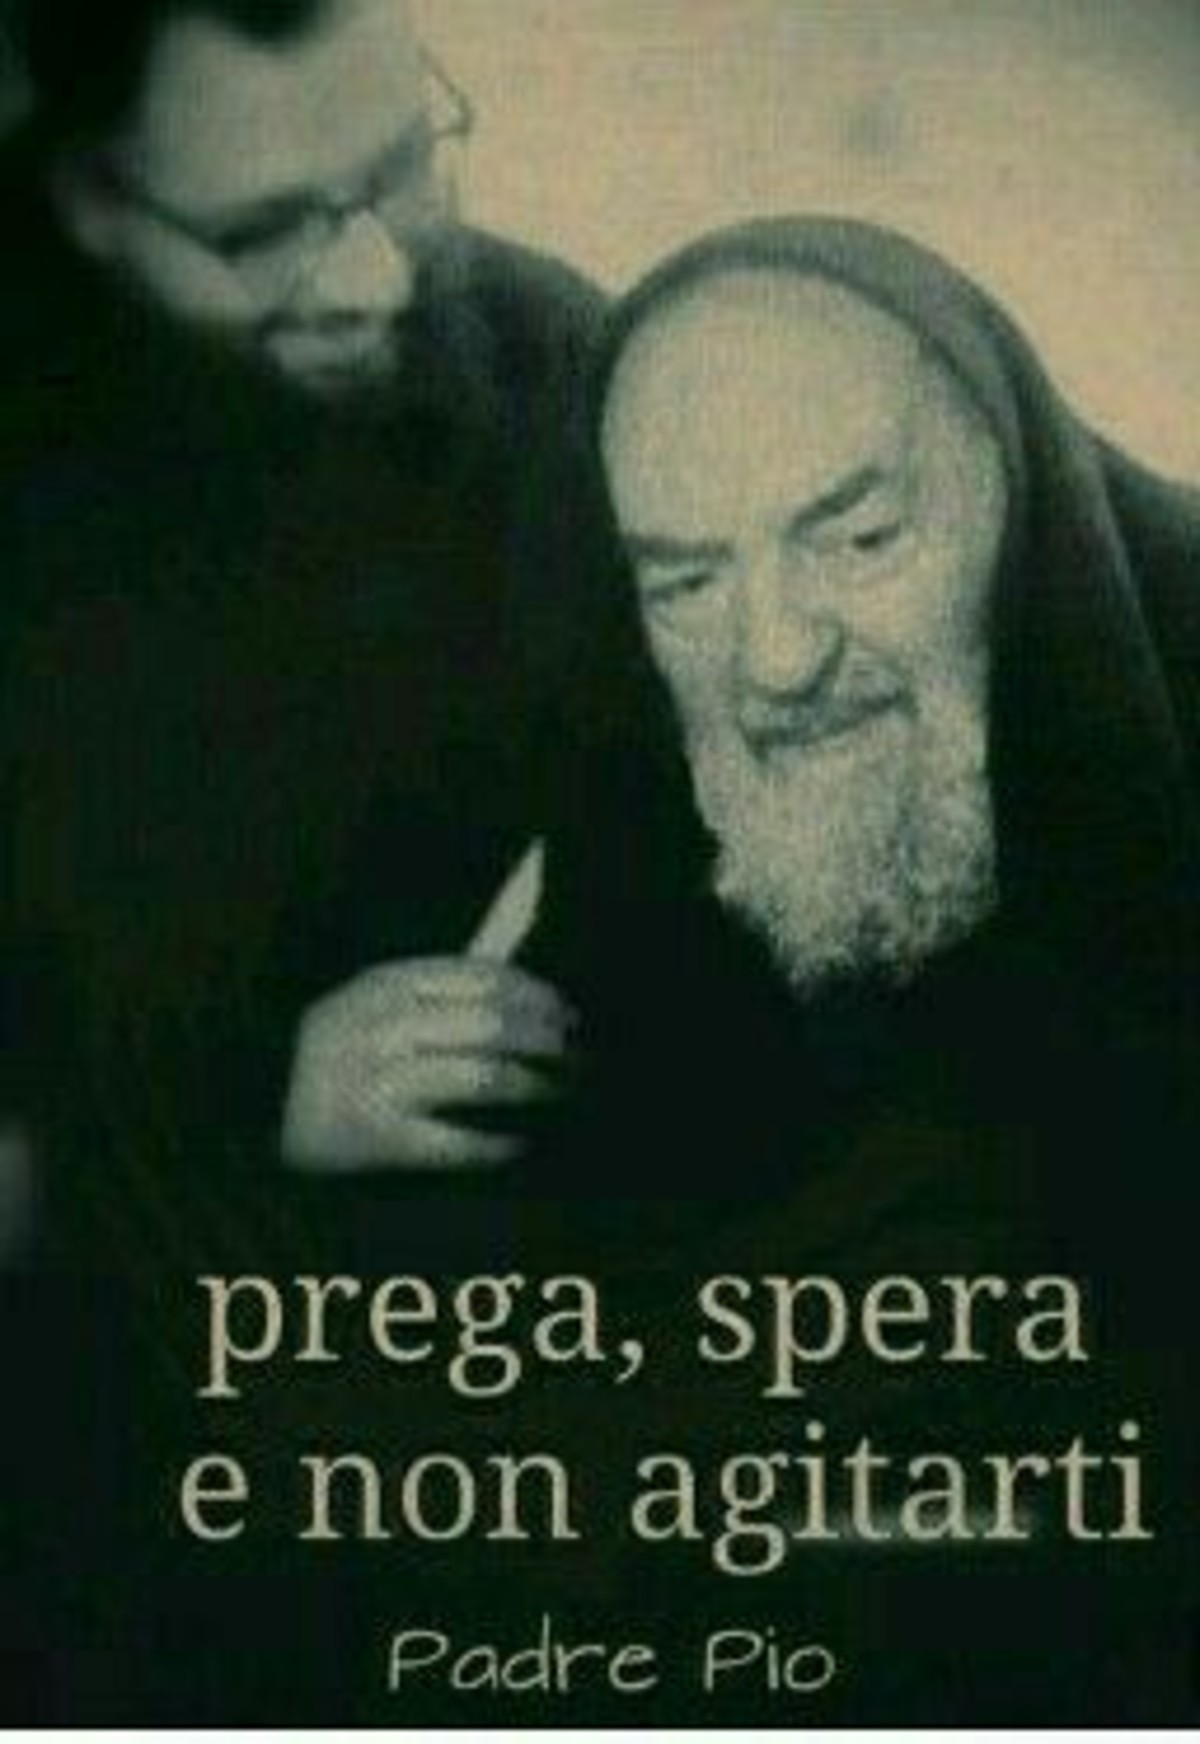 Padre Pio aforismi